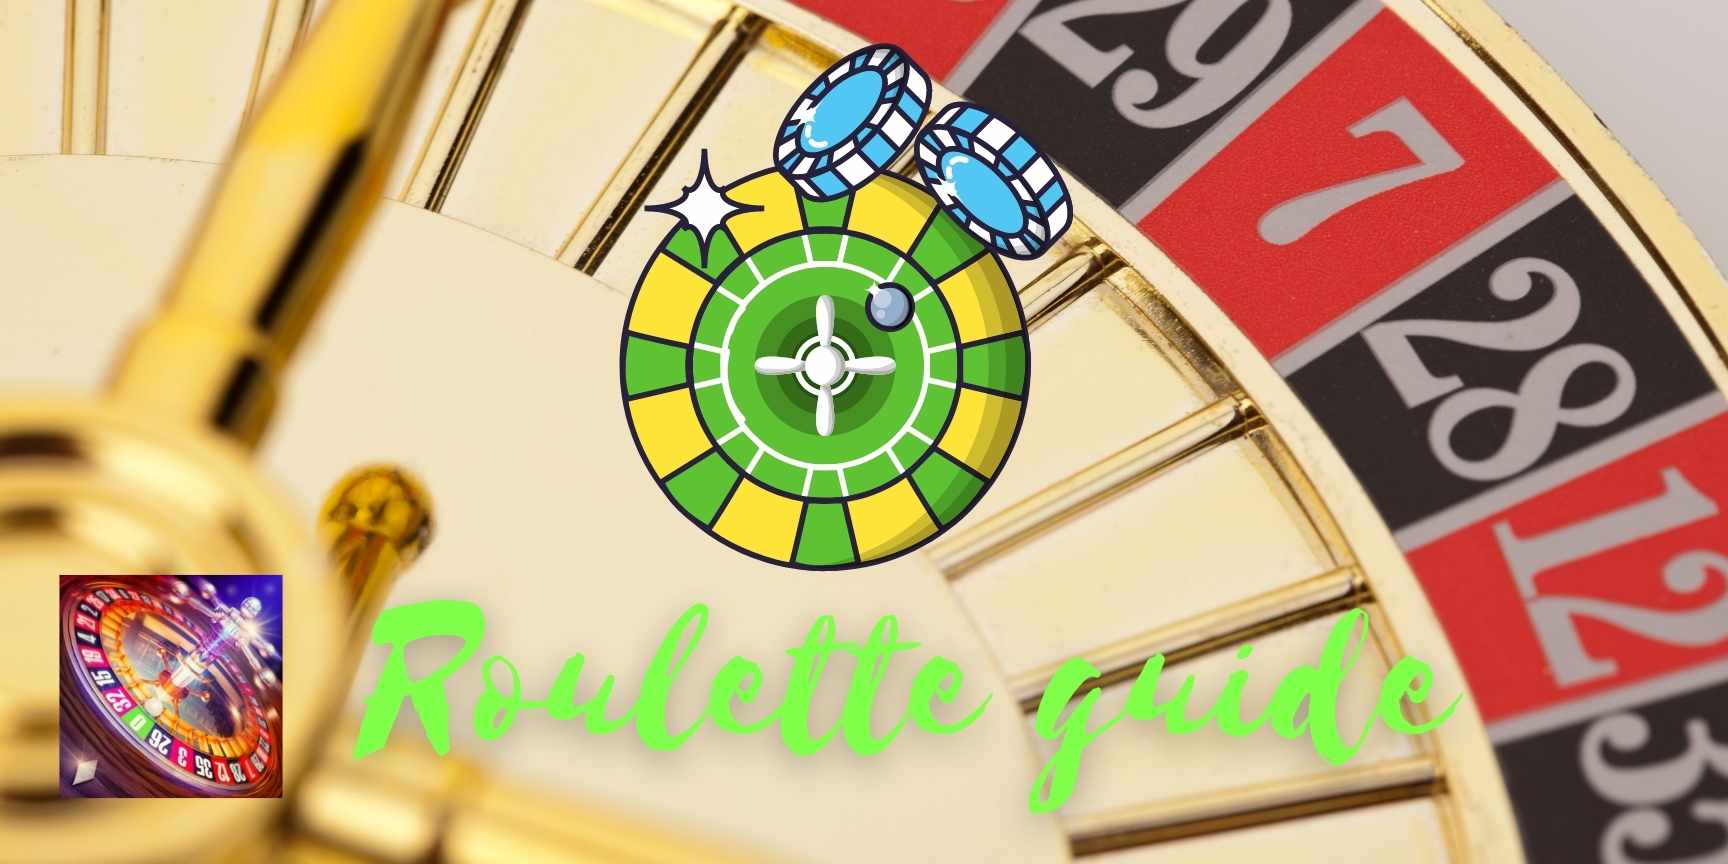 roulette guide